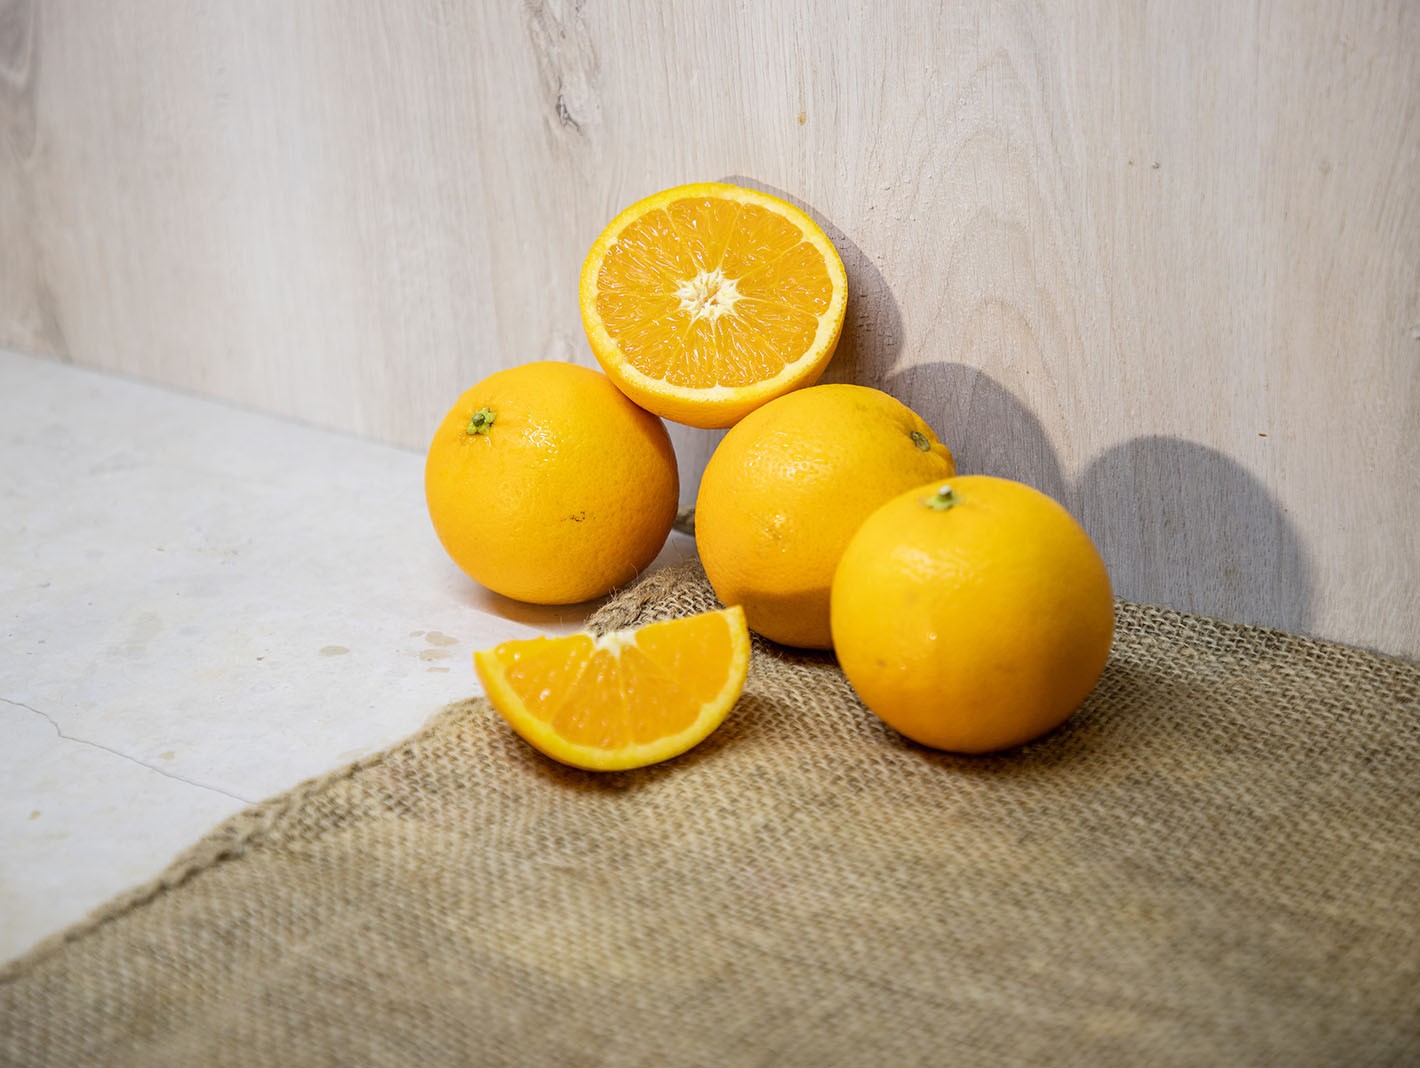 Oranfrutta Valencia Oranges